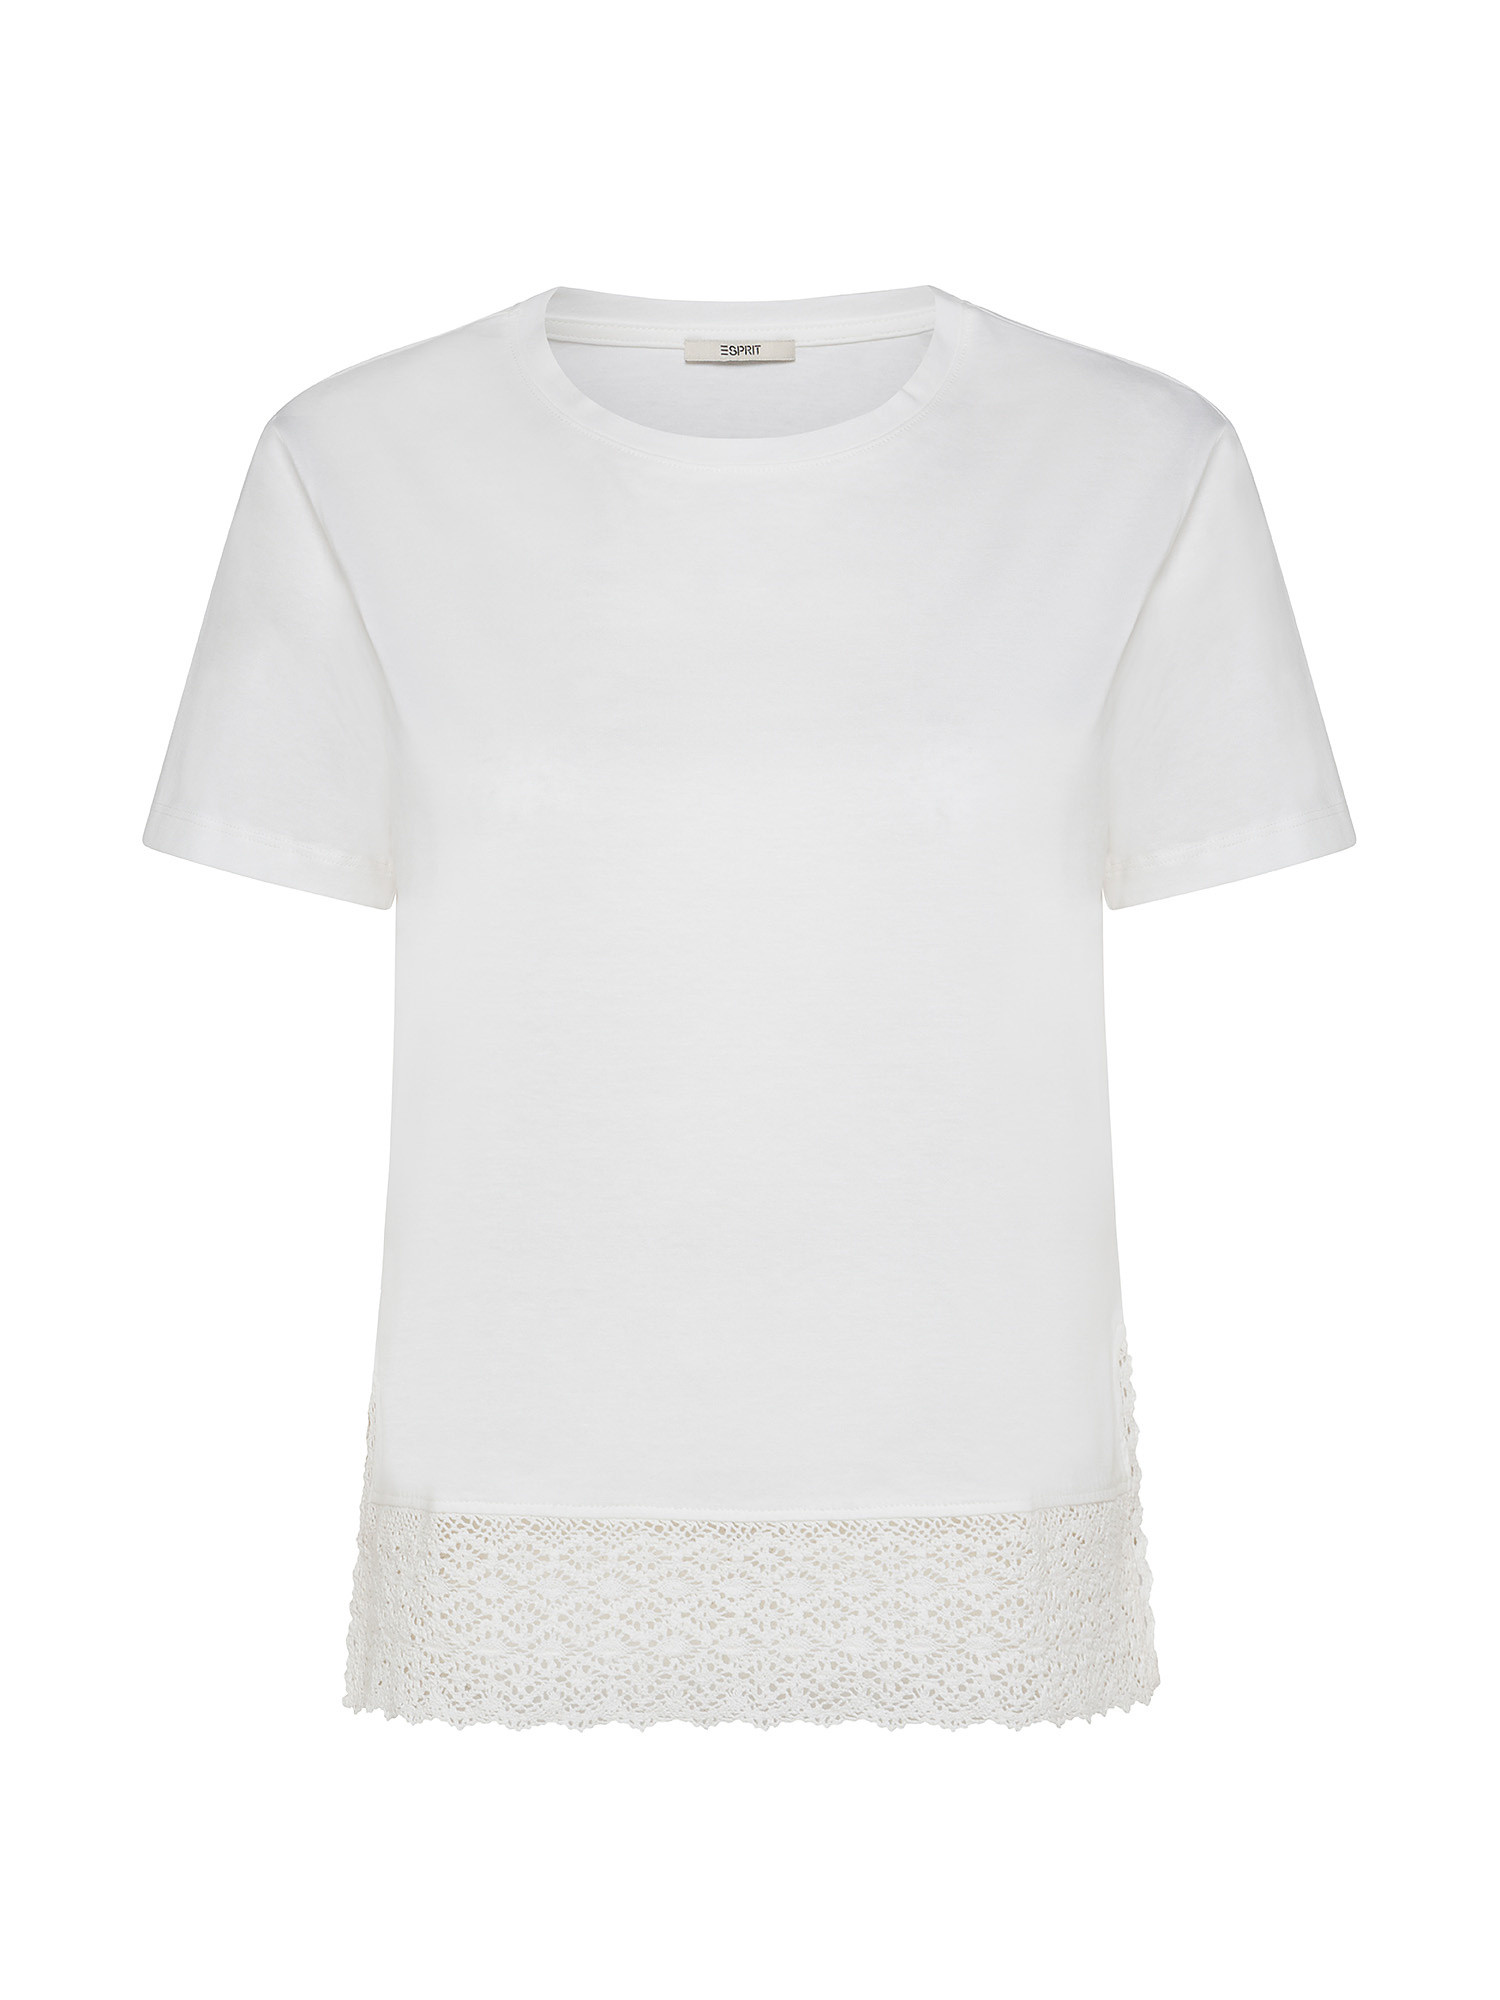 Esprit - Cotton T-shirt, White, large image number 0